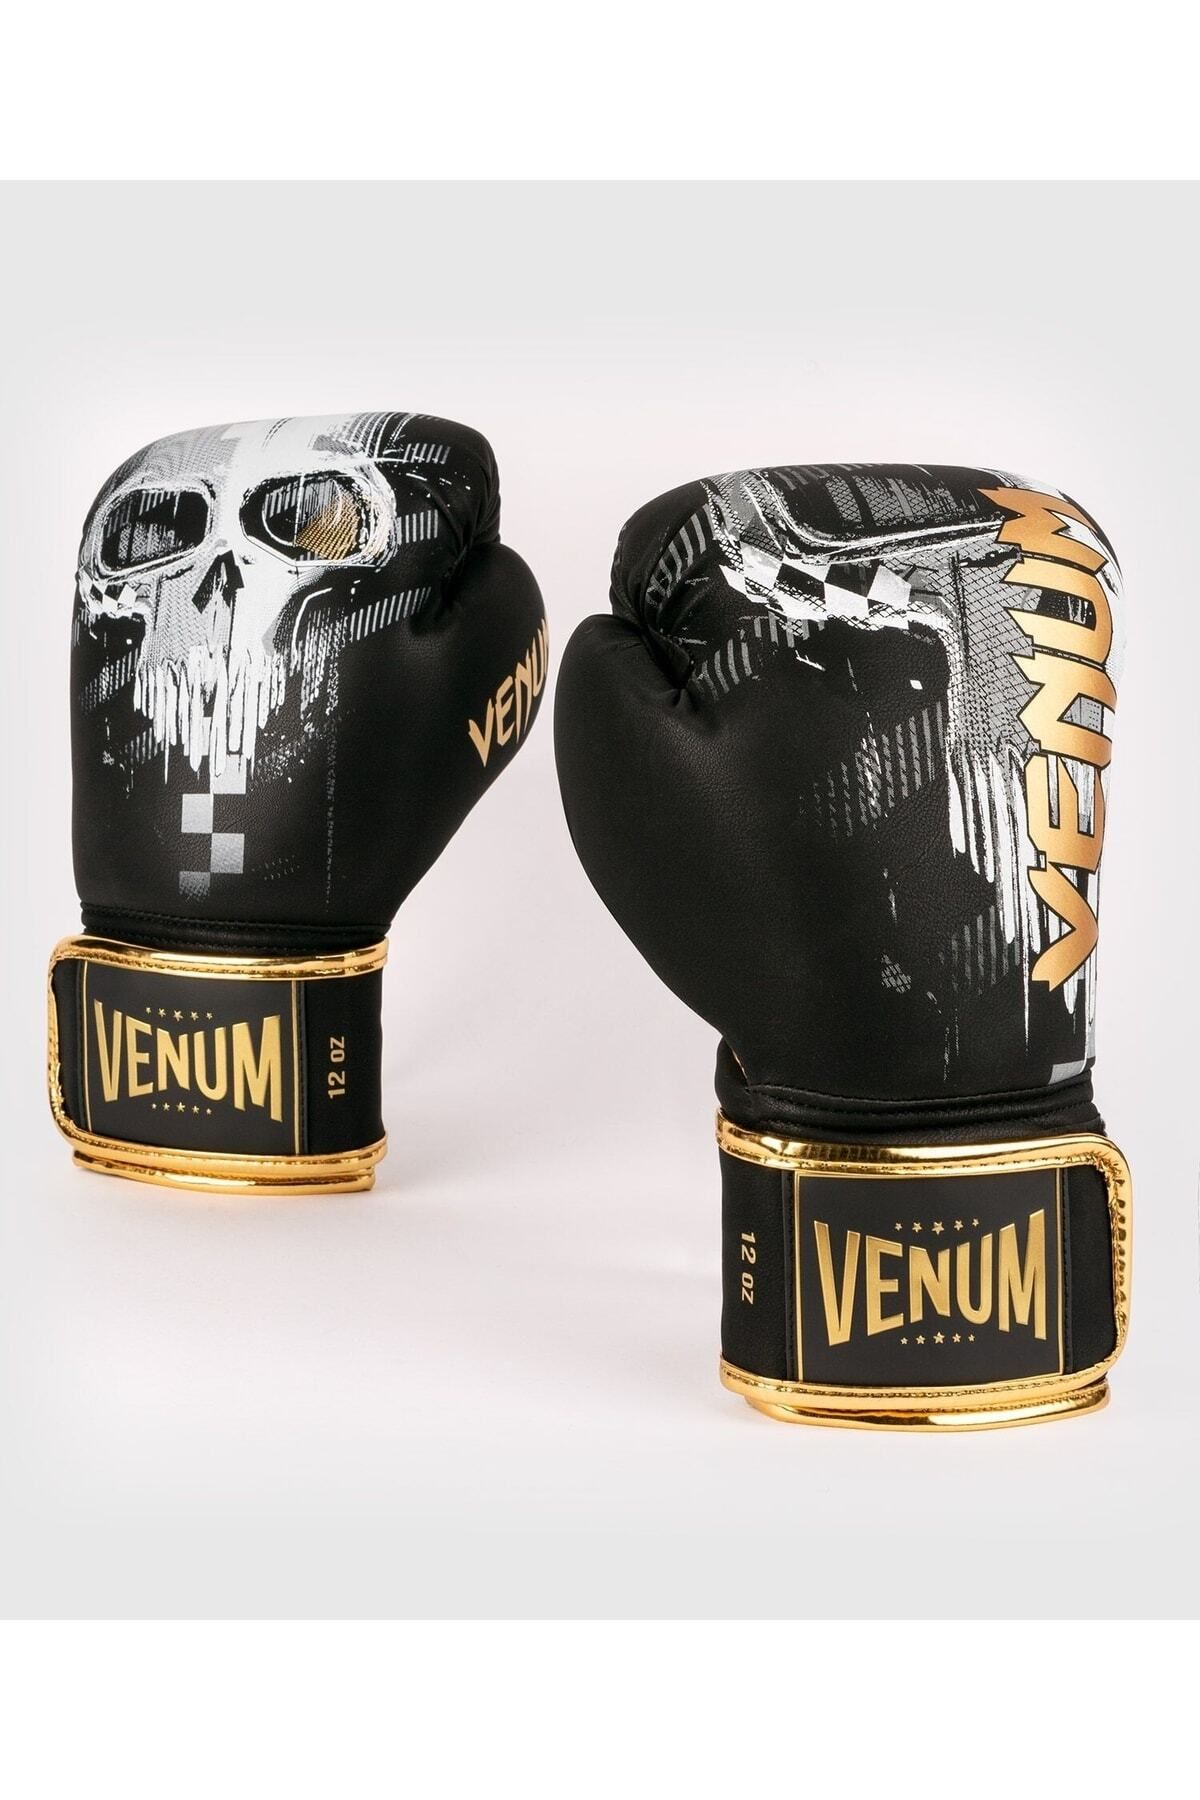 Venum Boxing Gloves "skull" Boks Eldiveni